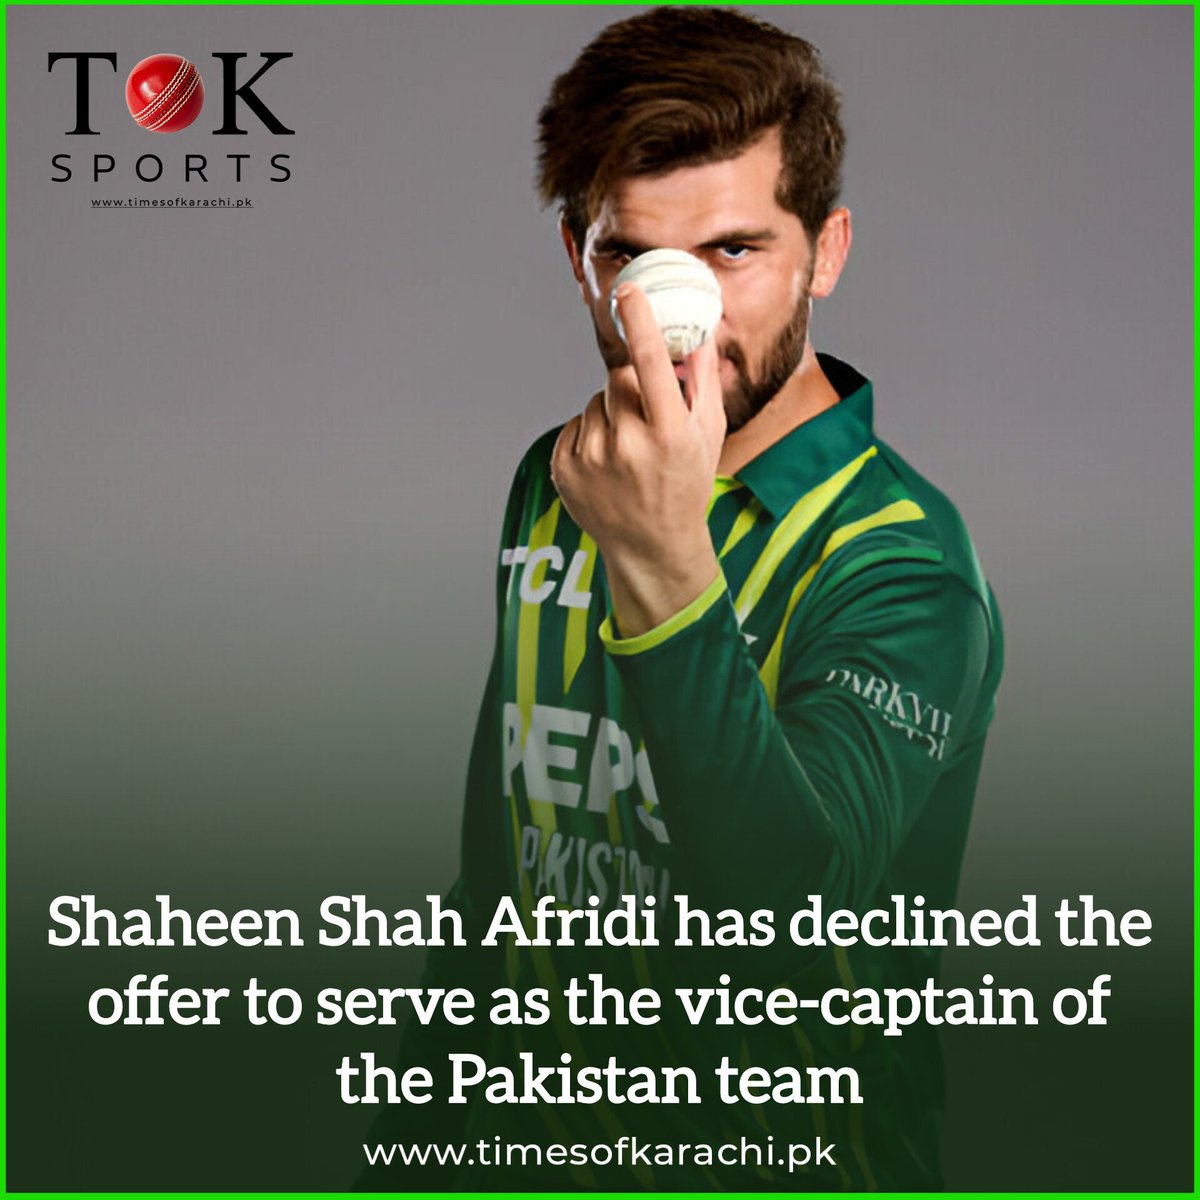 Shaheen Shah Afridi declines vice-captaincy of Pakistan team #TOKSports #ShaheenShahAfridi